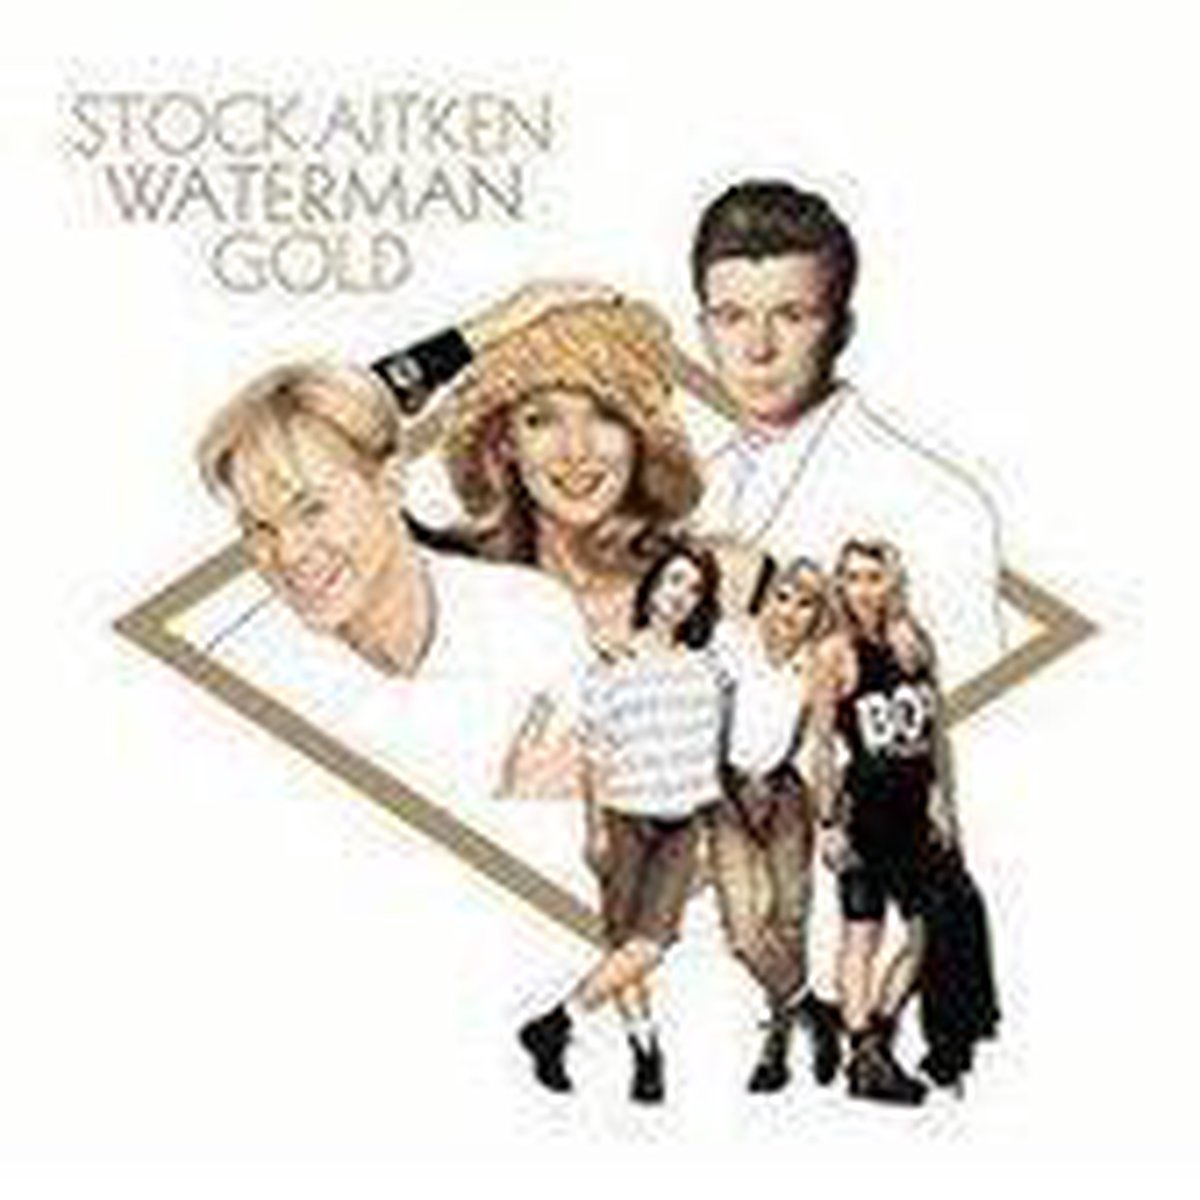 Stock Aitken Waterman Gold, Feat. Rick Astley, Mel & Kim, Kylie, Bananarama - STOCK, AITKEN & WATERMAN